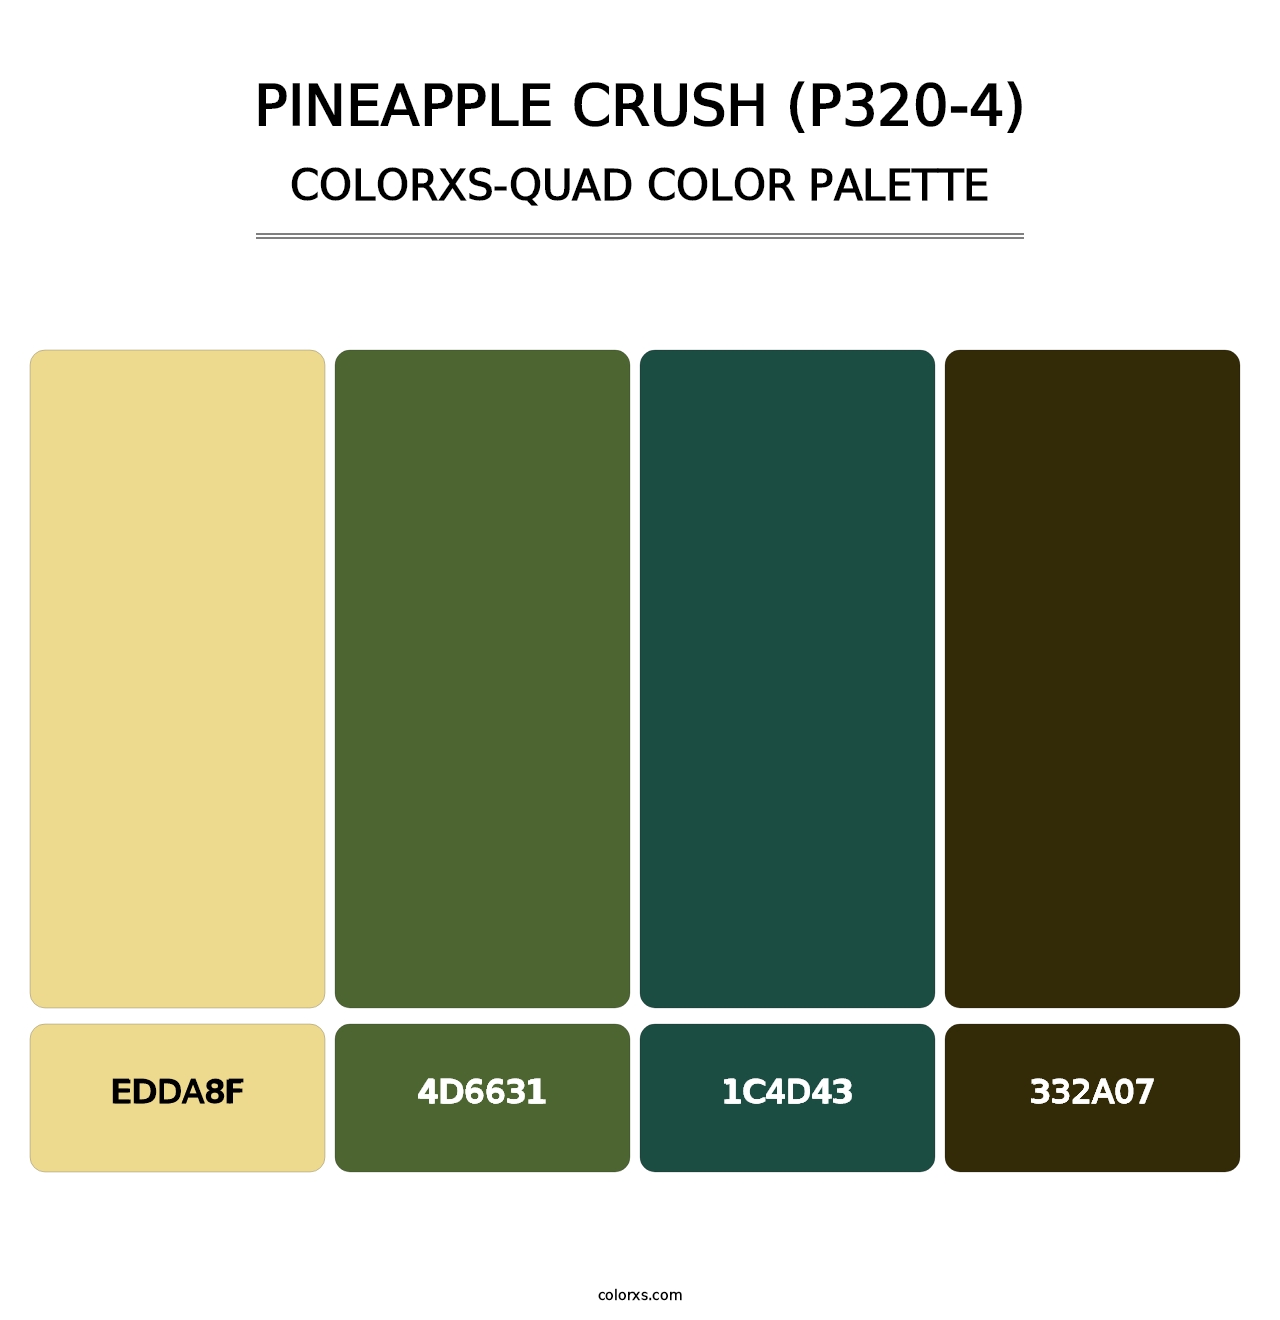 Pineapple Crush (P320-4) - Colorxs Quad Palette